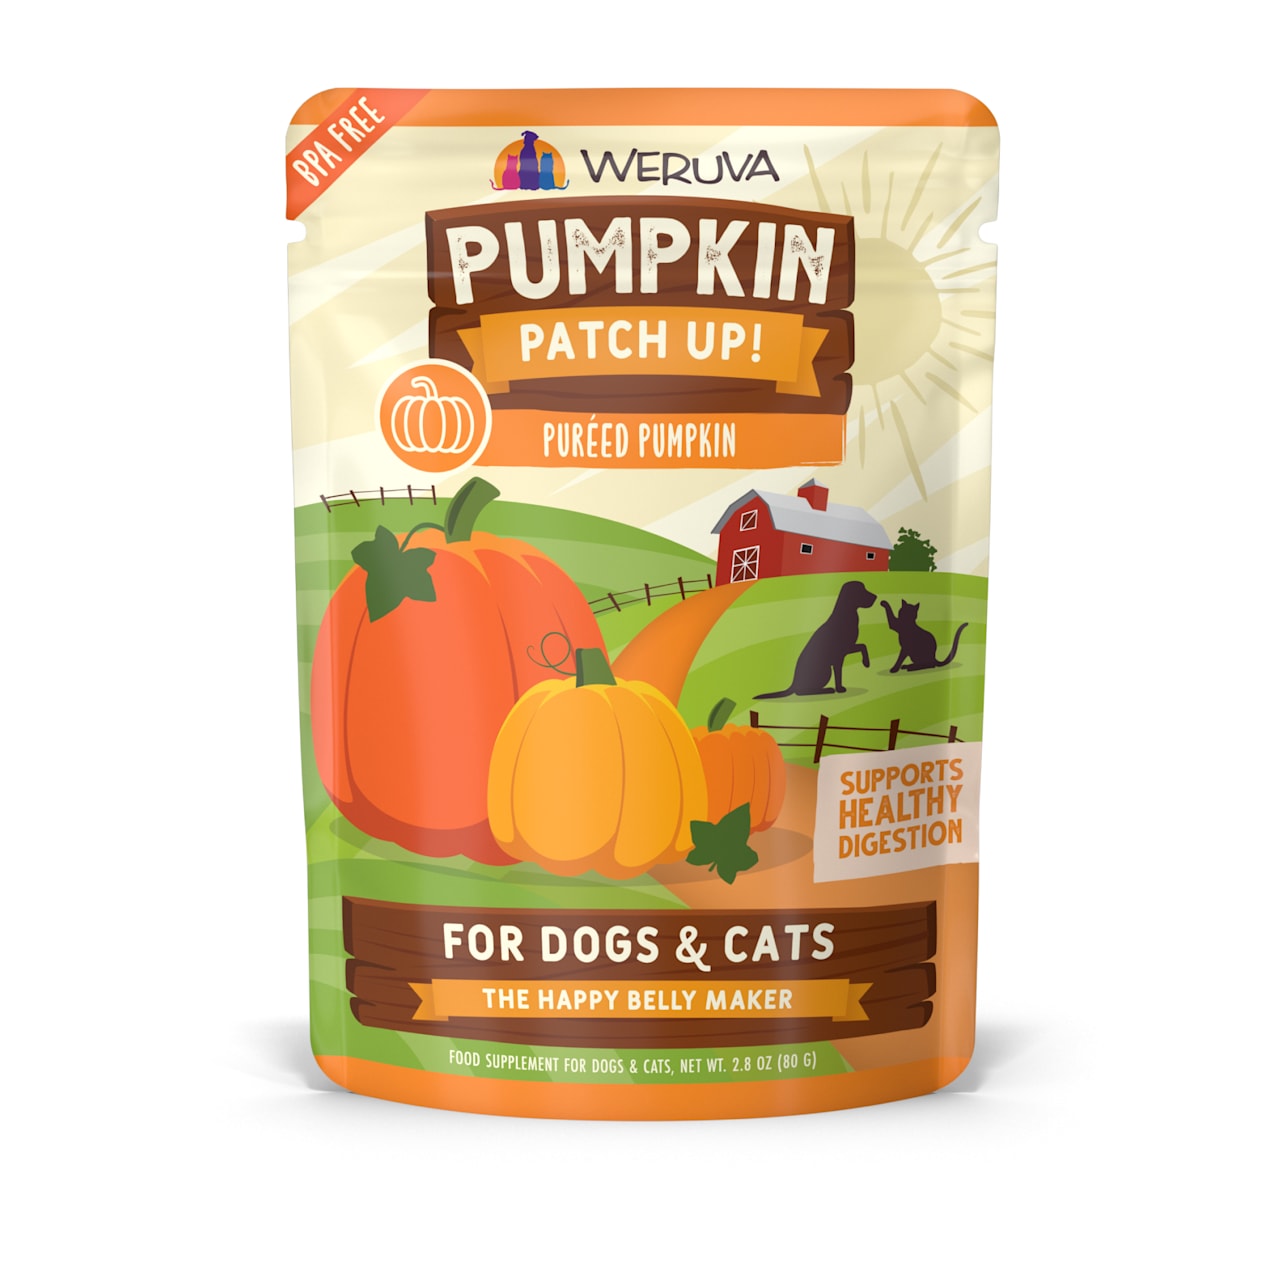 Weruva Pumpkin Patch Up! Pureed Pumpkin Food Supplement for Dogs and